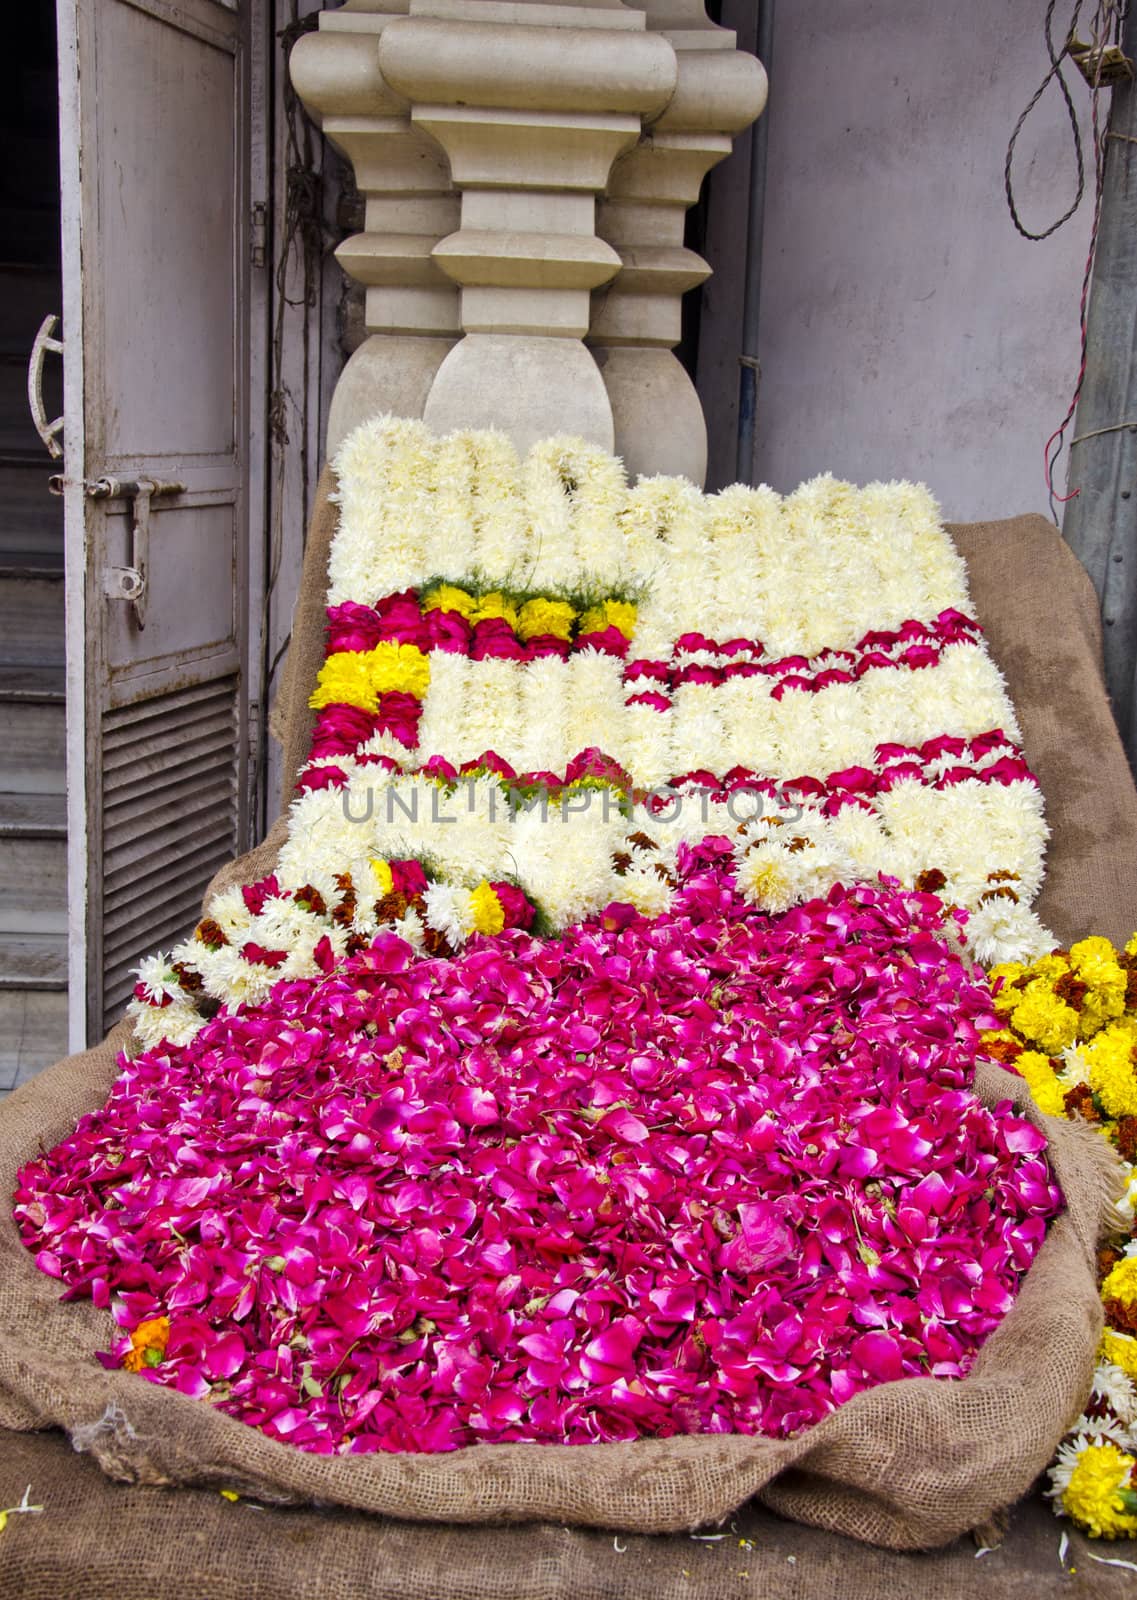 various flowers in Delhi street market by alis_photo